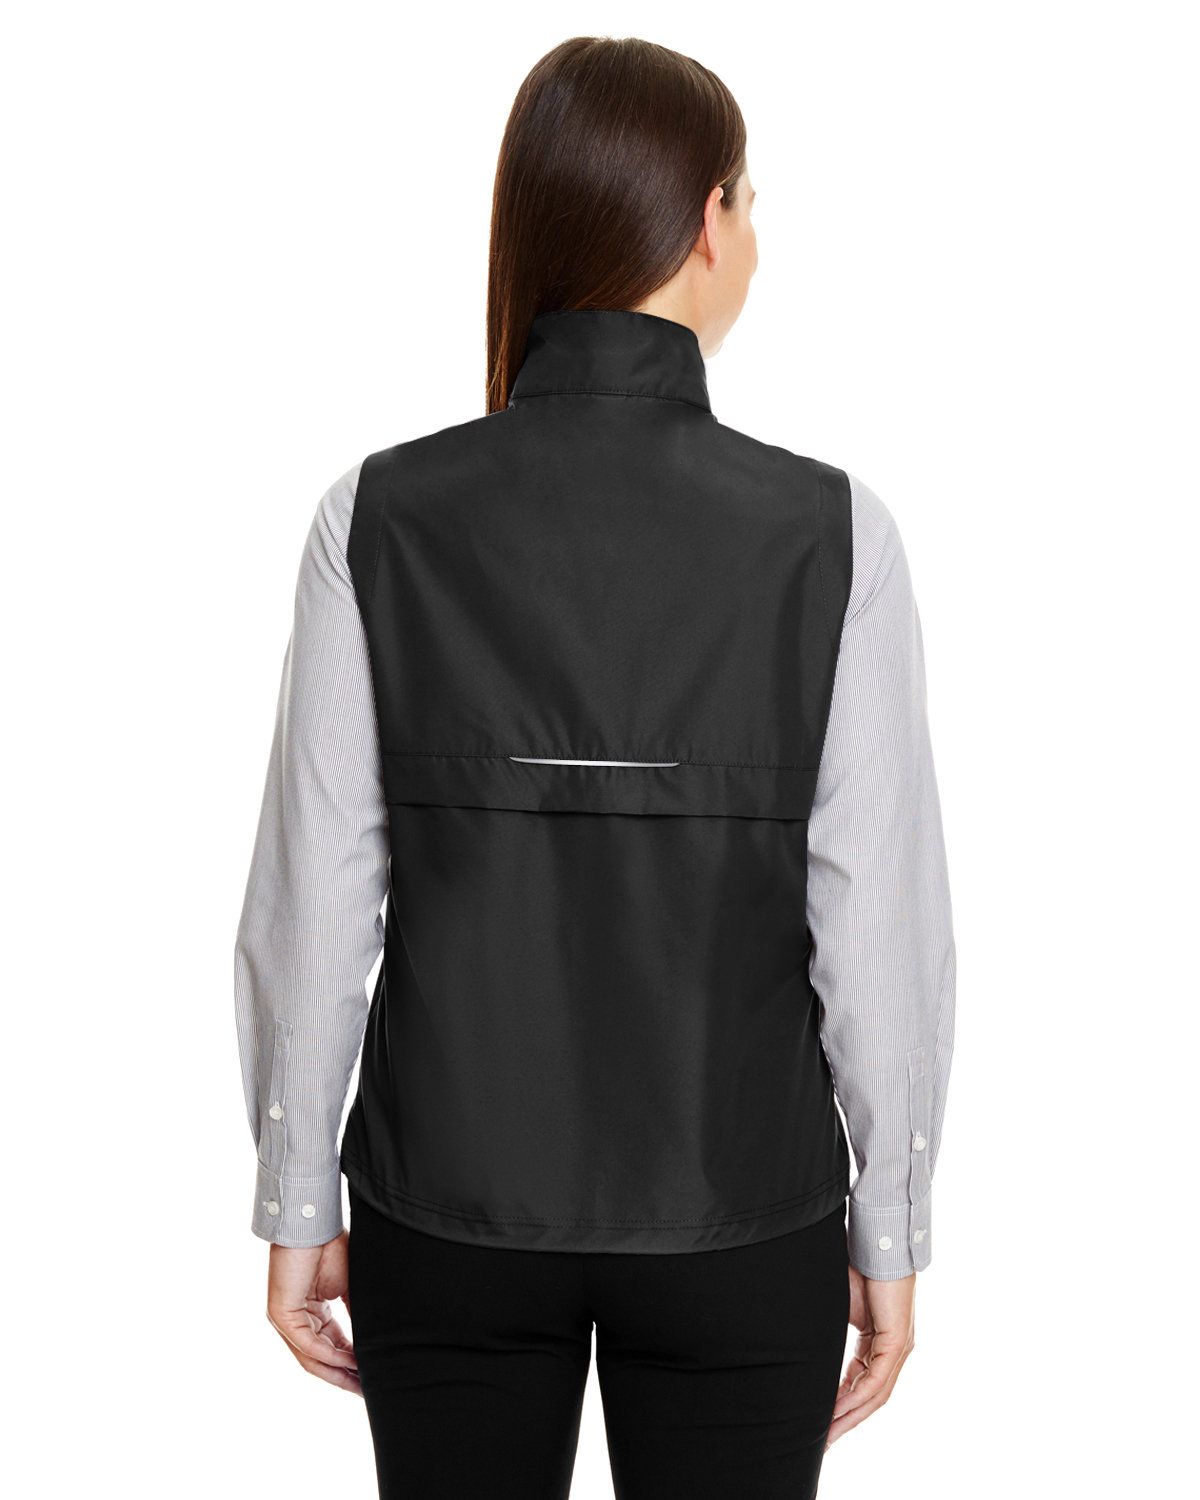 'Core365 CE703W Women's Techno Lite Unlined Vest'